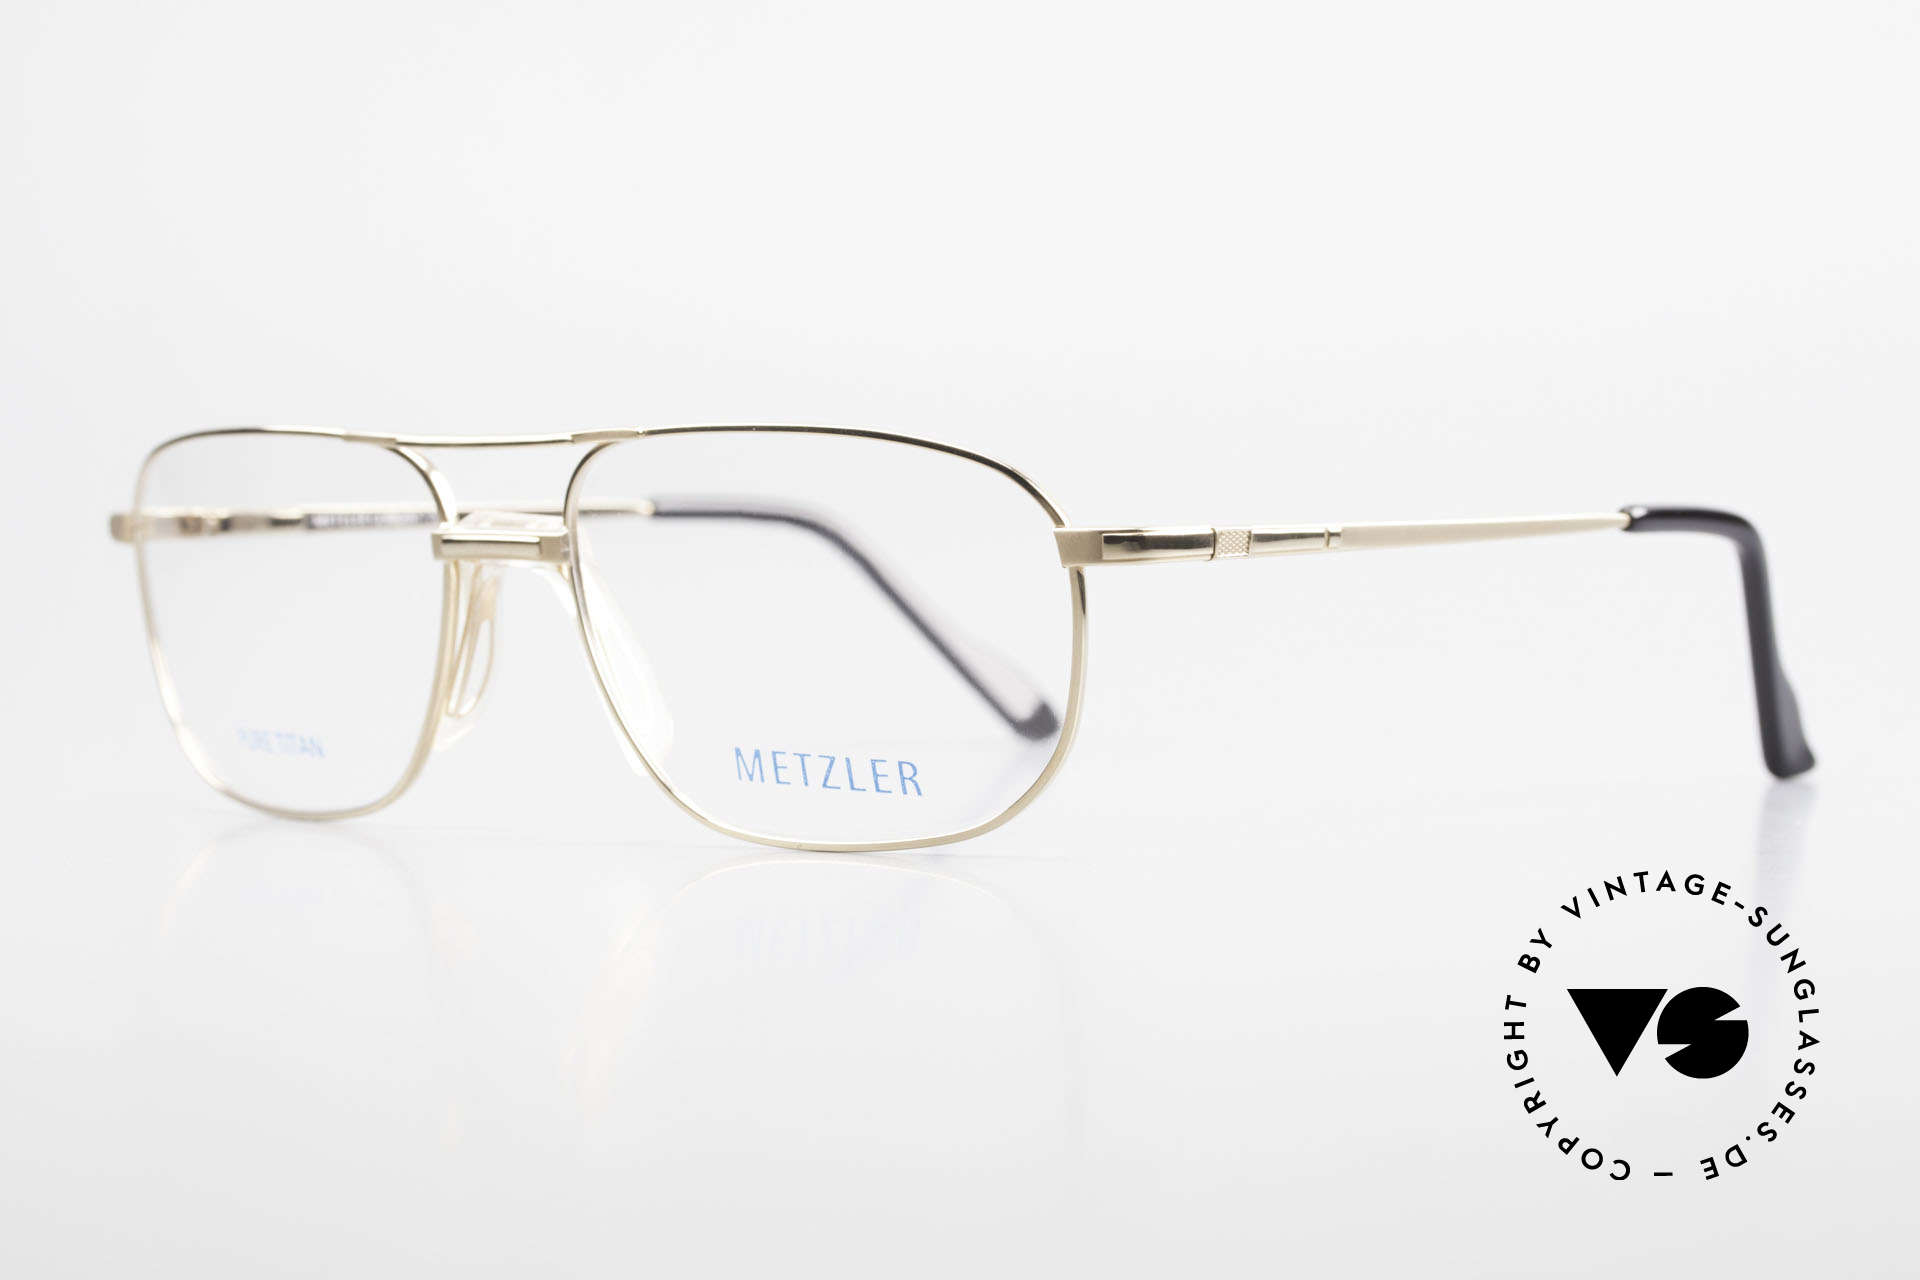 Metzler 1714 Classic Men's Glasses Titan, classic men's glasses, 'made in Germany' quality, Made for Men